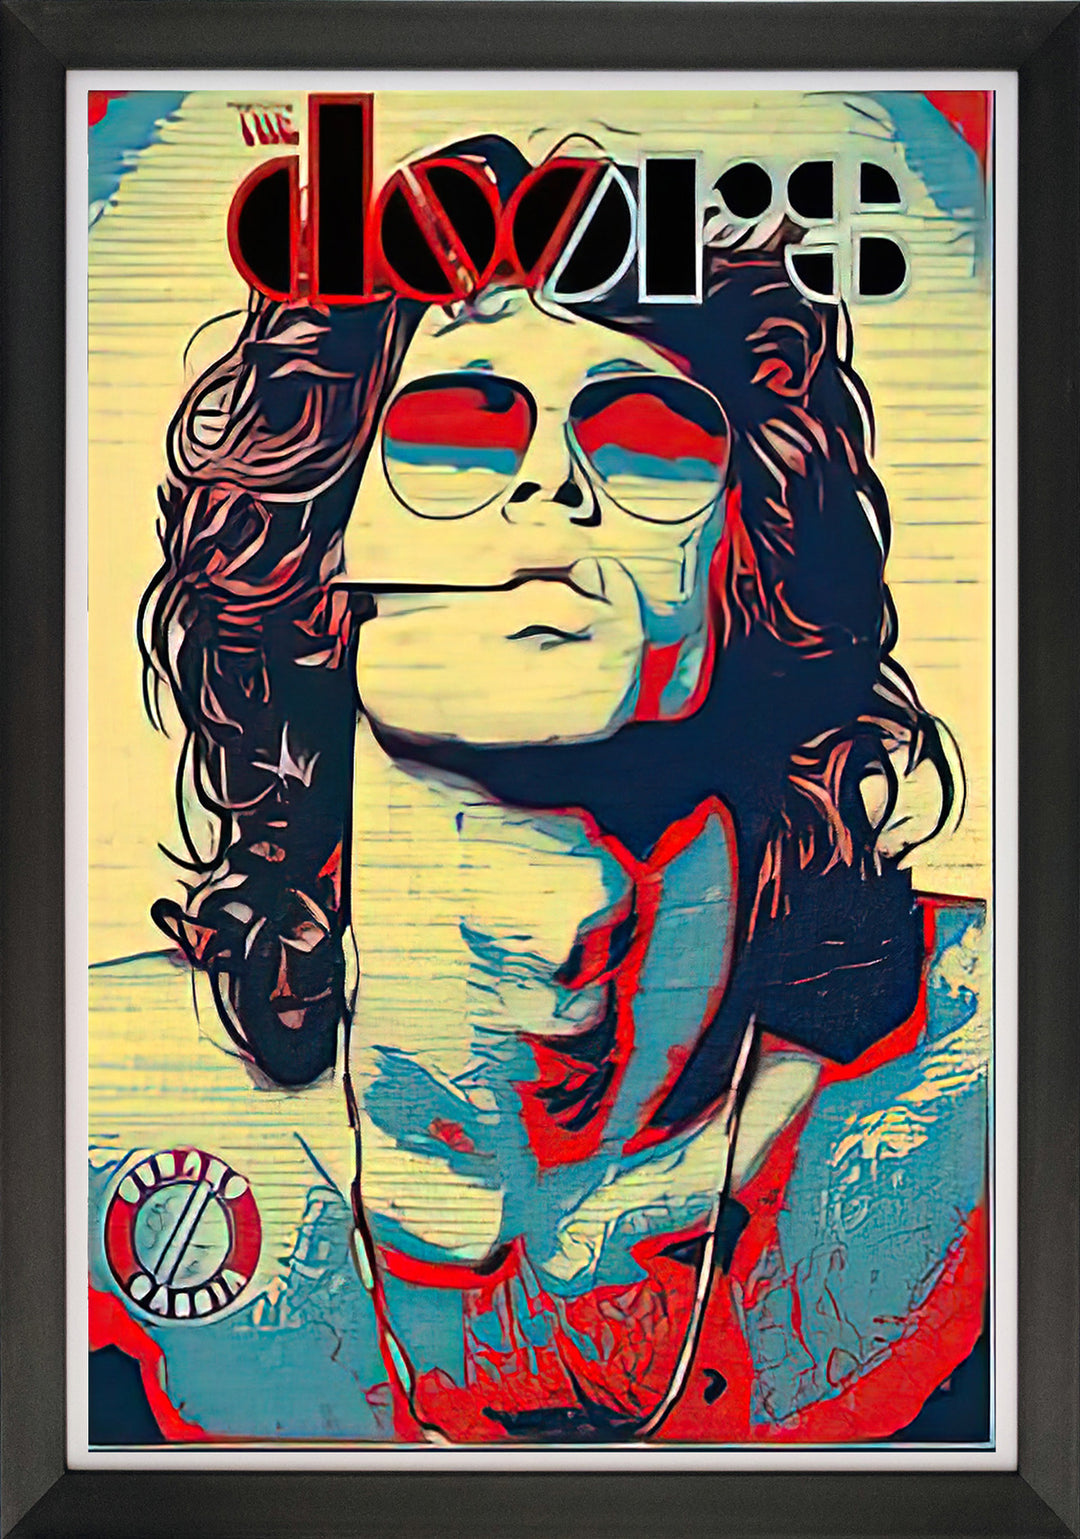 The Doors - Jim Morrison - Framed Pop Art Reprint, The Doors, Pop Culture Art, Music, Collectibile Memorabilia, AAAPM32772